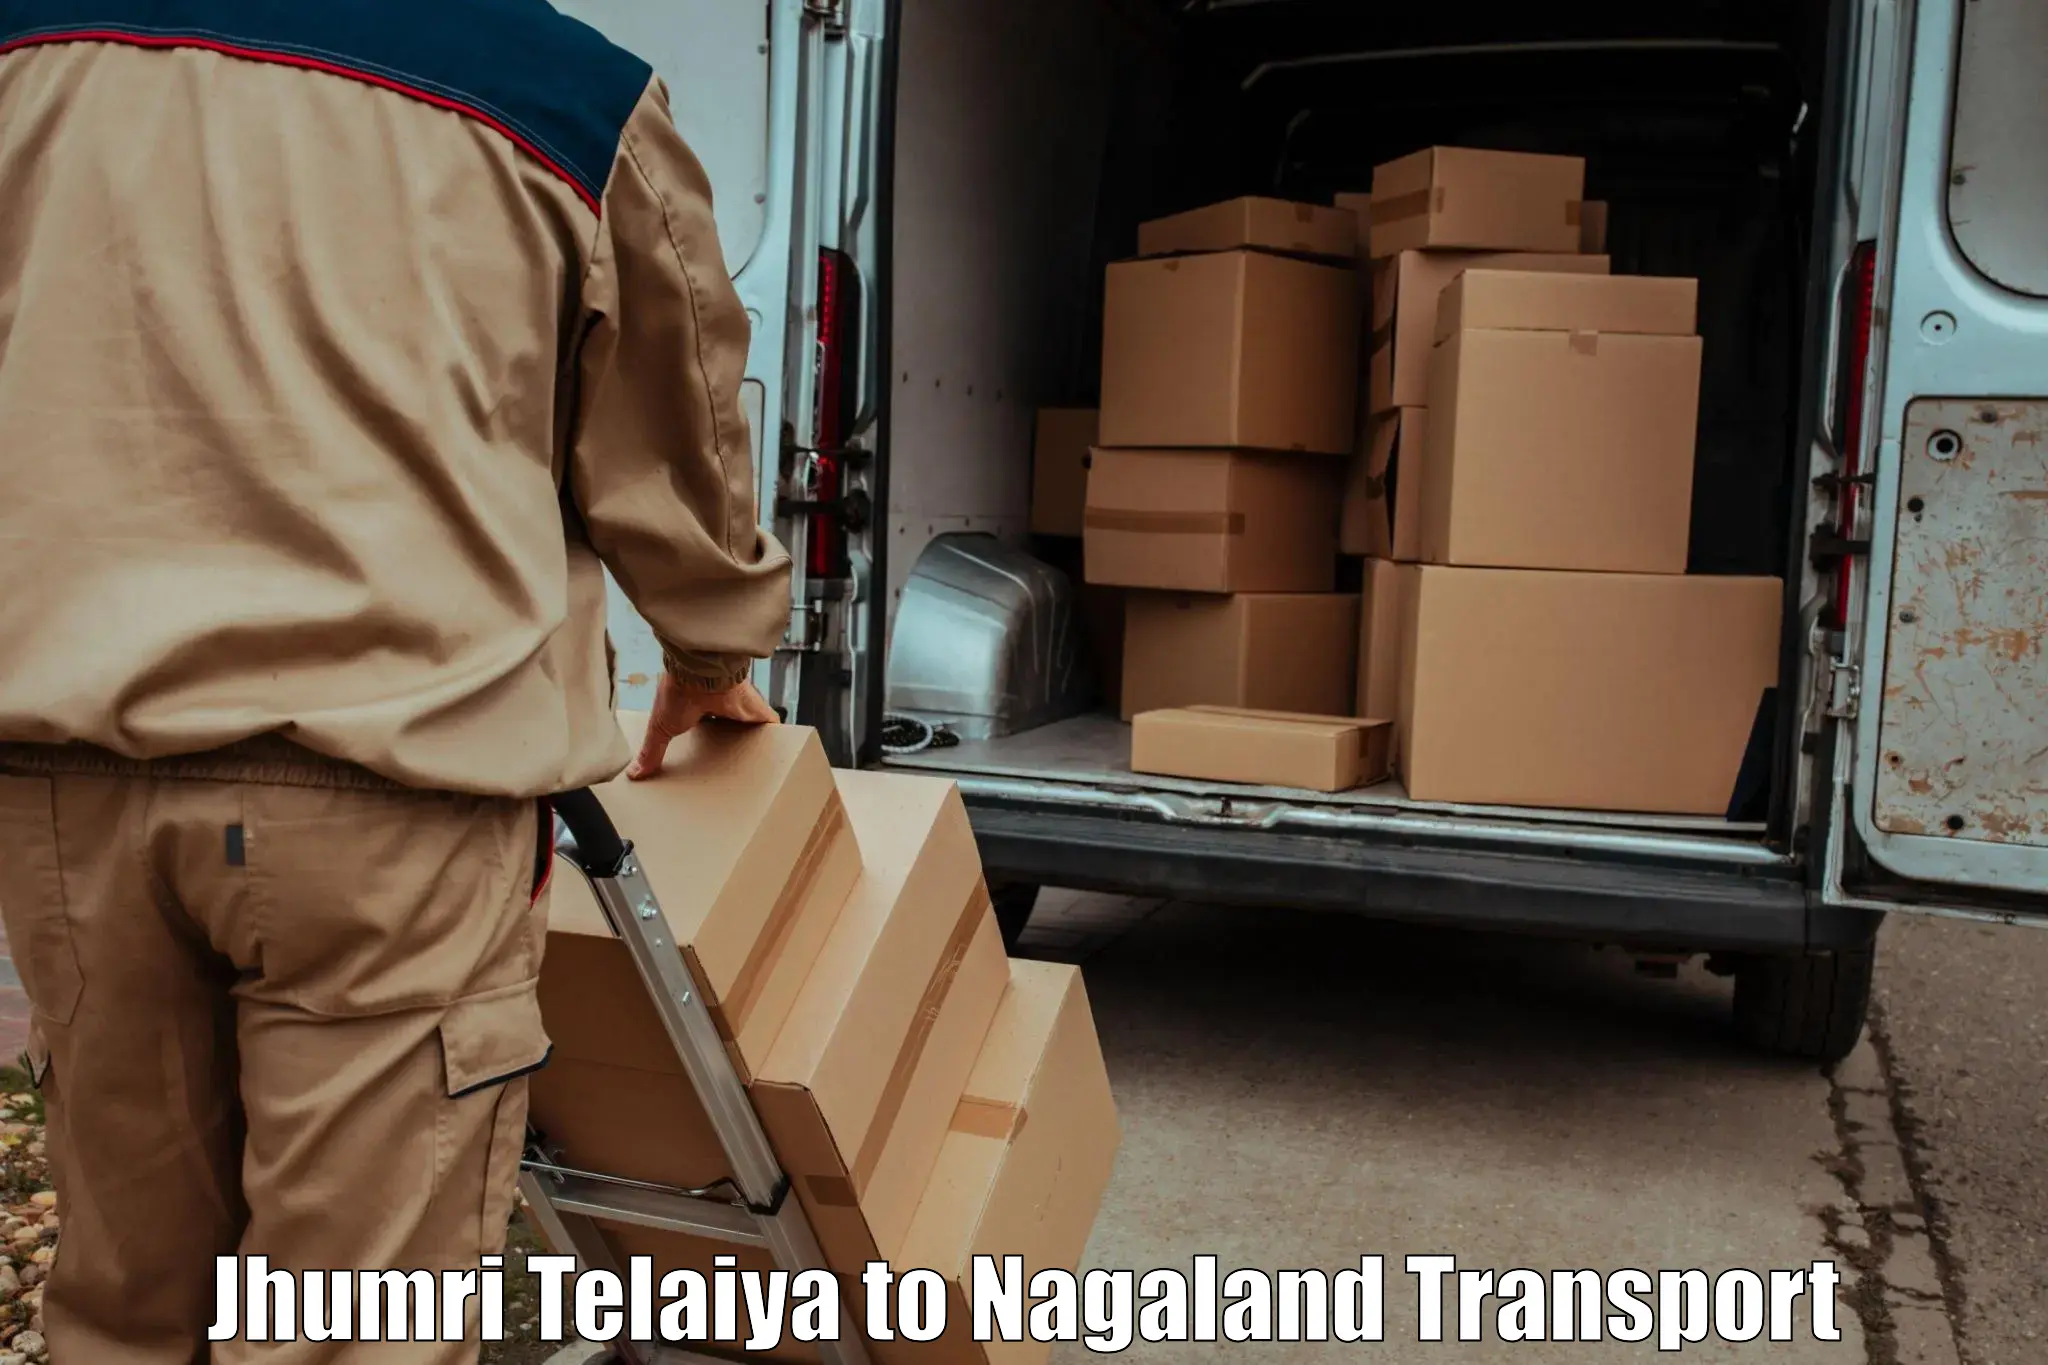 Cargo train transport services in Jhumri Telaiya to Nagaland